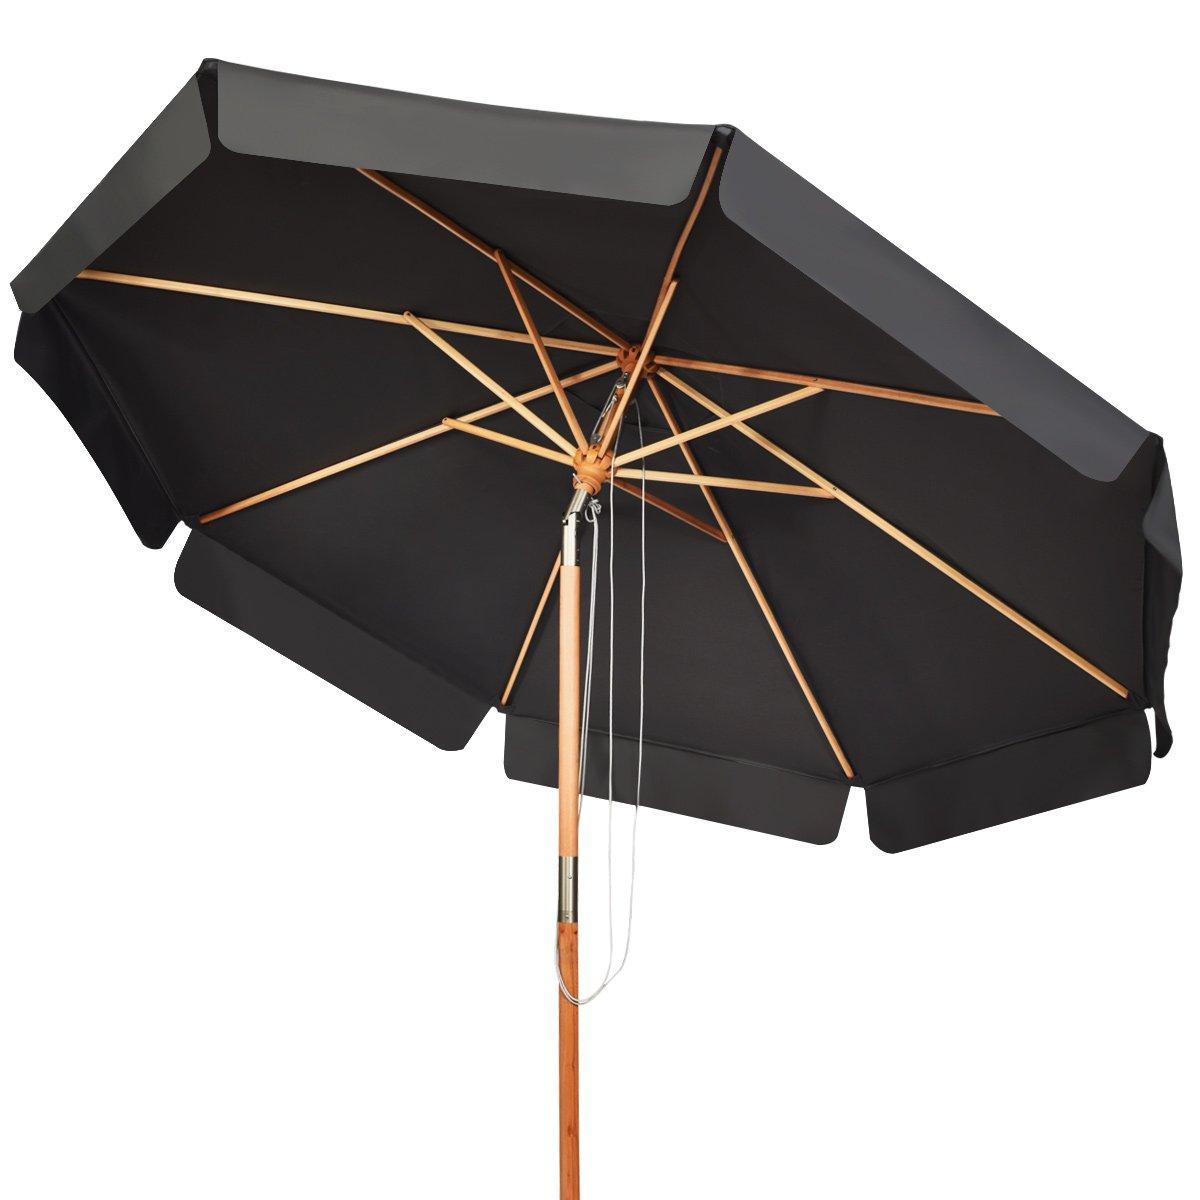 3m Garden Parasol Tilt Bar Market Table Umbrella with Valance and 8 Solid Ribs